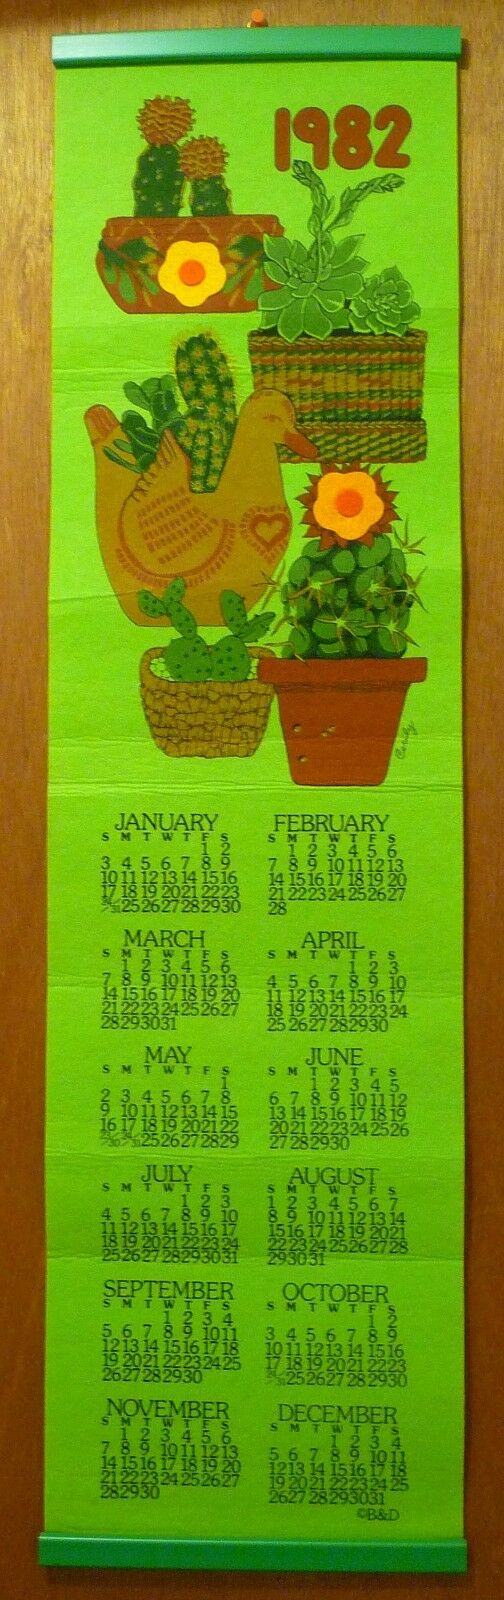 1982 Felt Calendar, cactus design